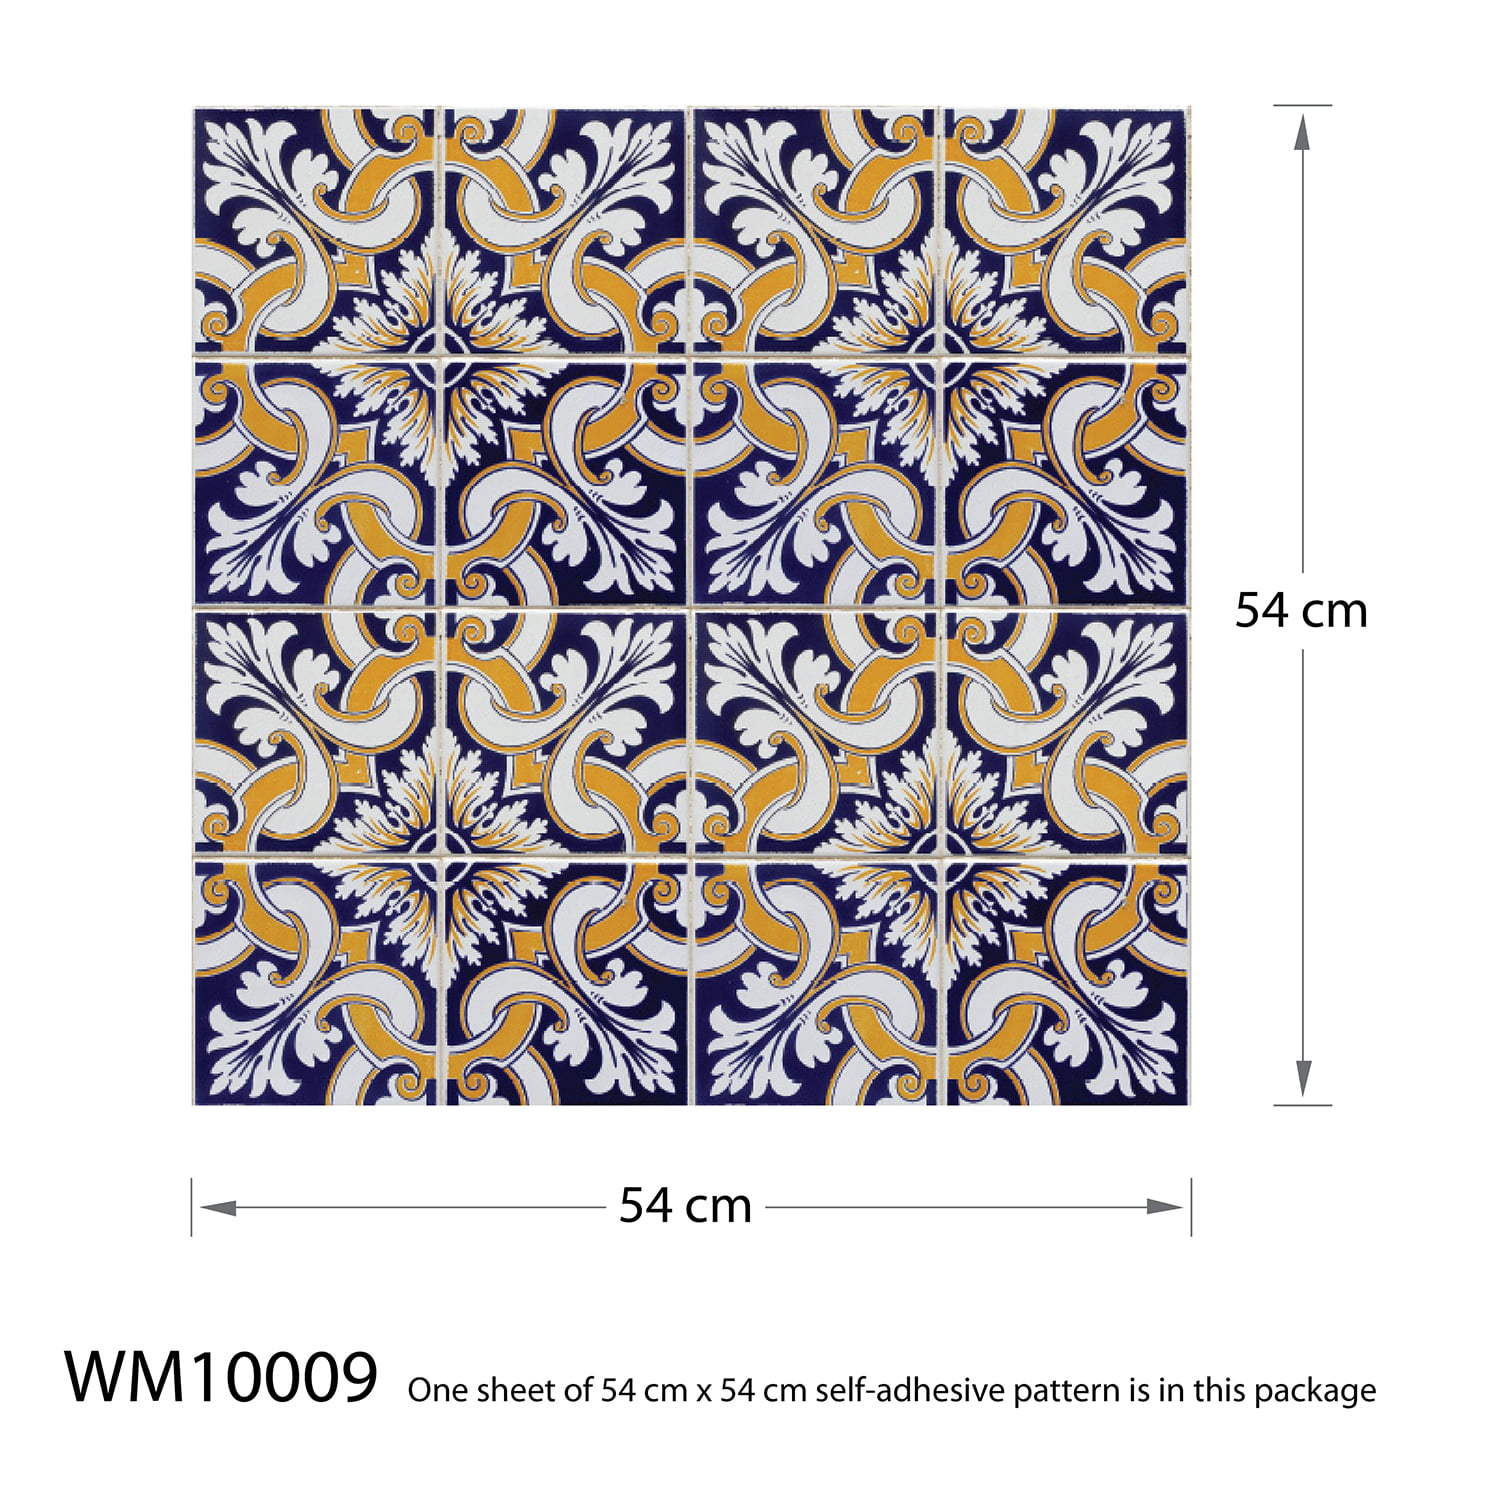 Flexiplus Mediterranean Tile Pattern Window Film Sticker 1 sheet of 54x54cm 